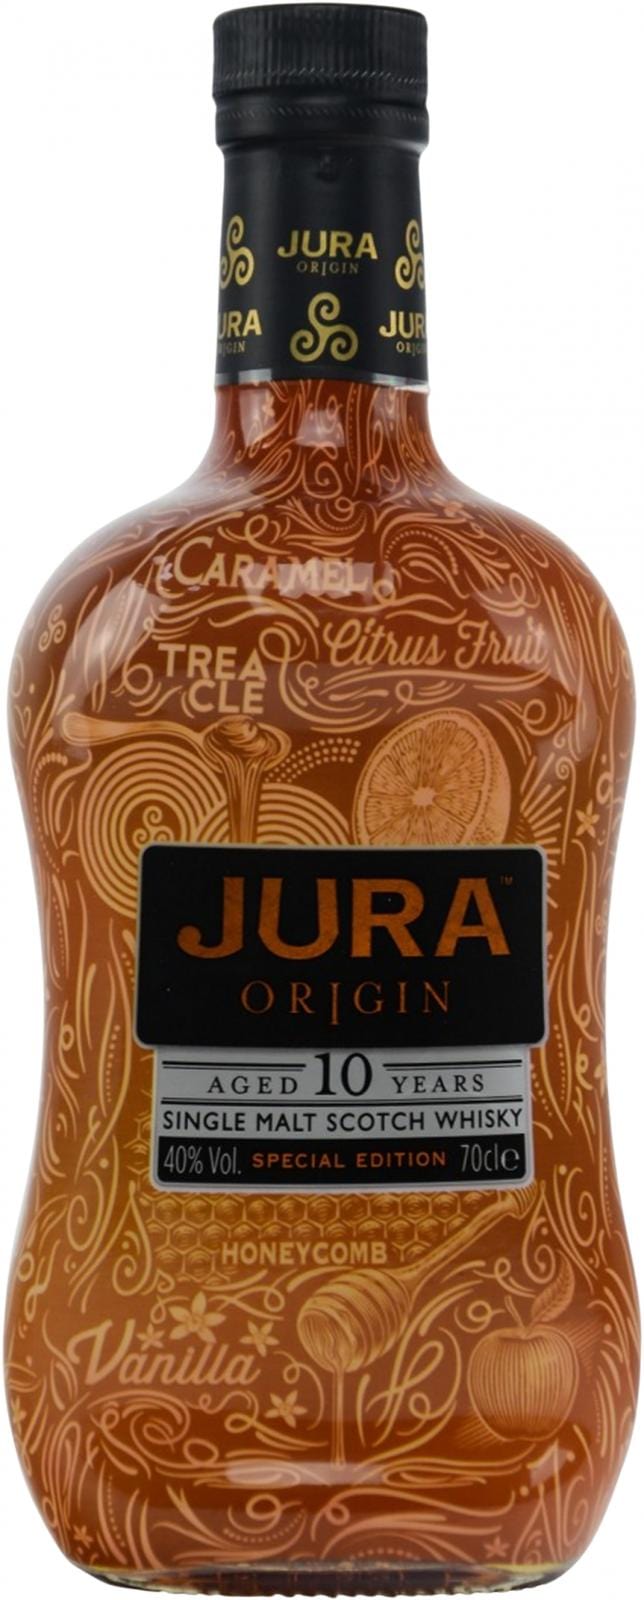 Jura Origin 10 Year Old Special Edition Single Malt Scotch Whisky 70cl